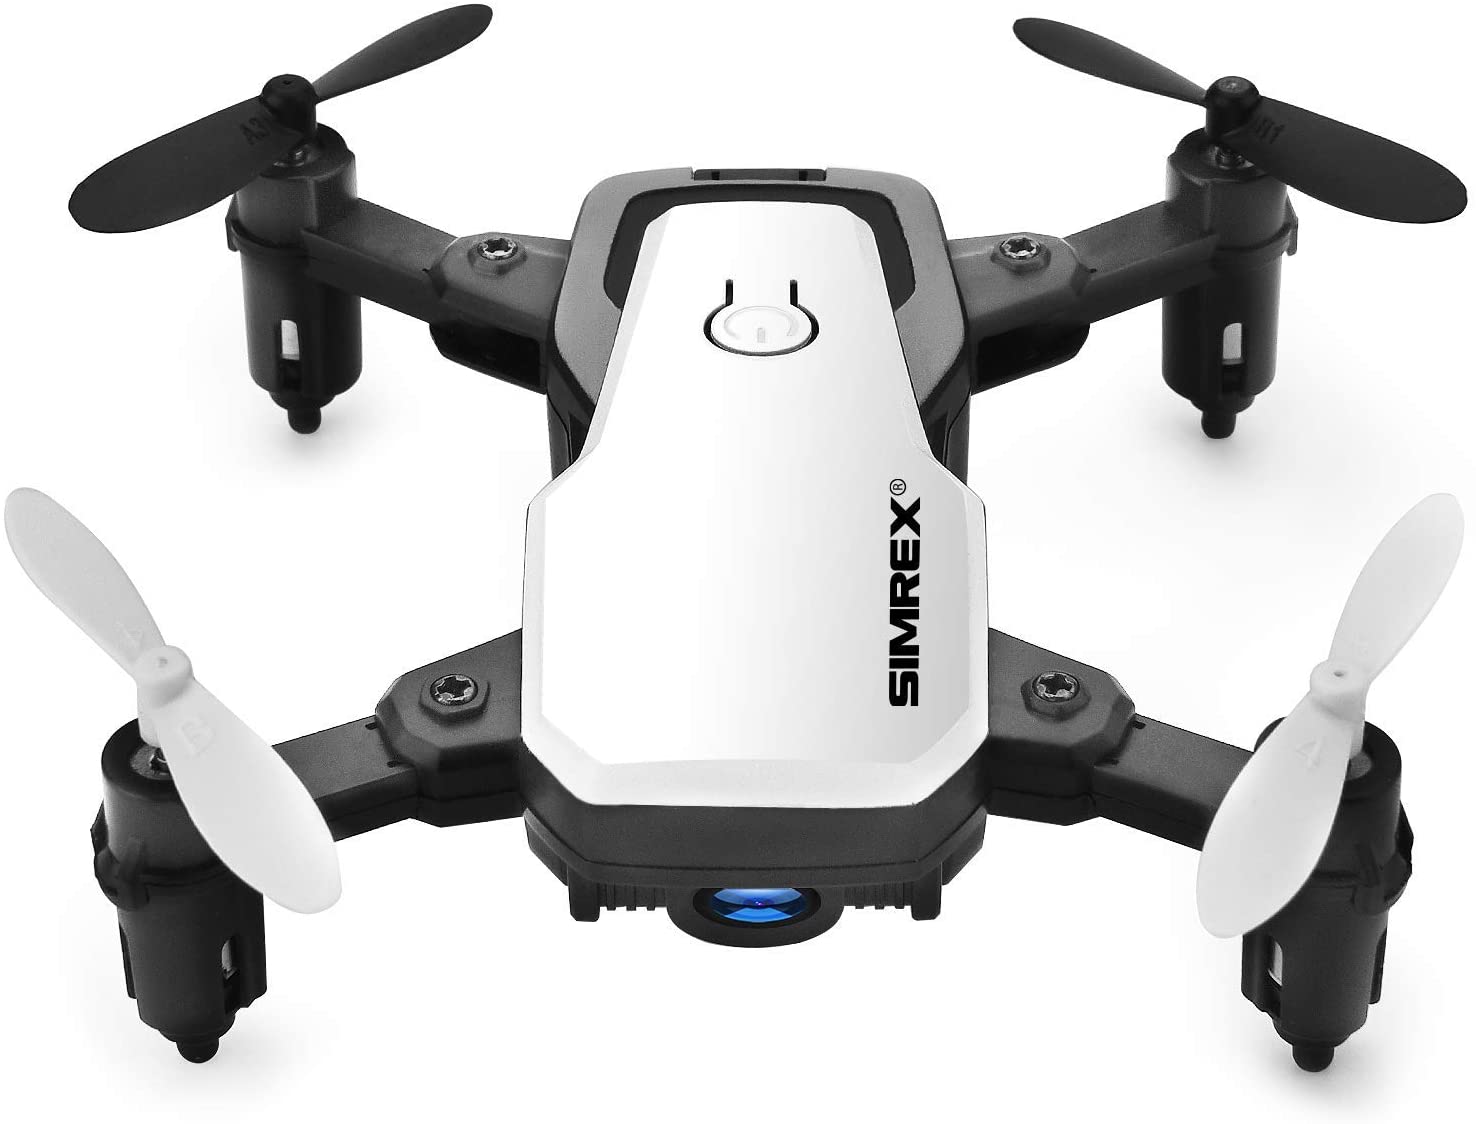 reviews on quad air drone